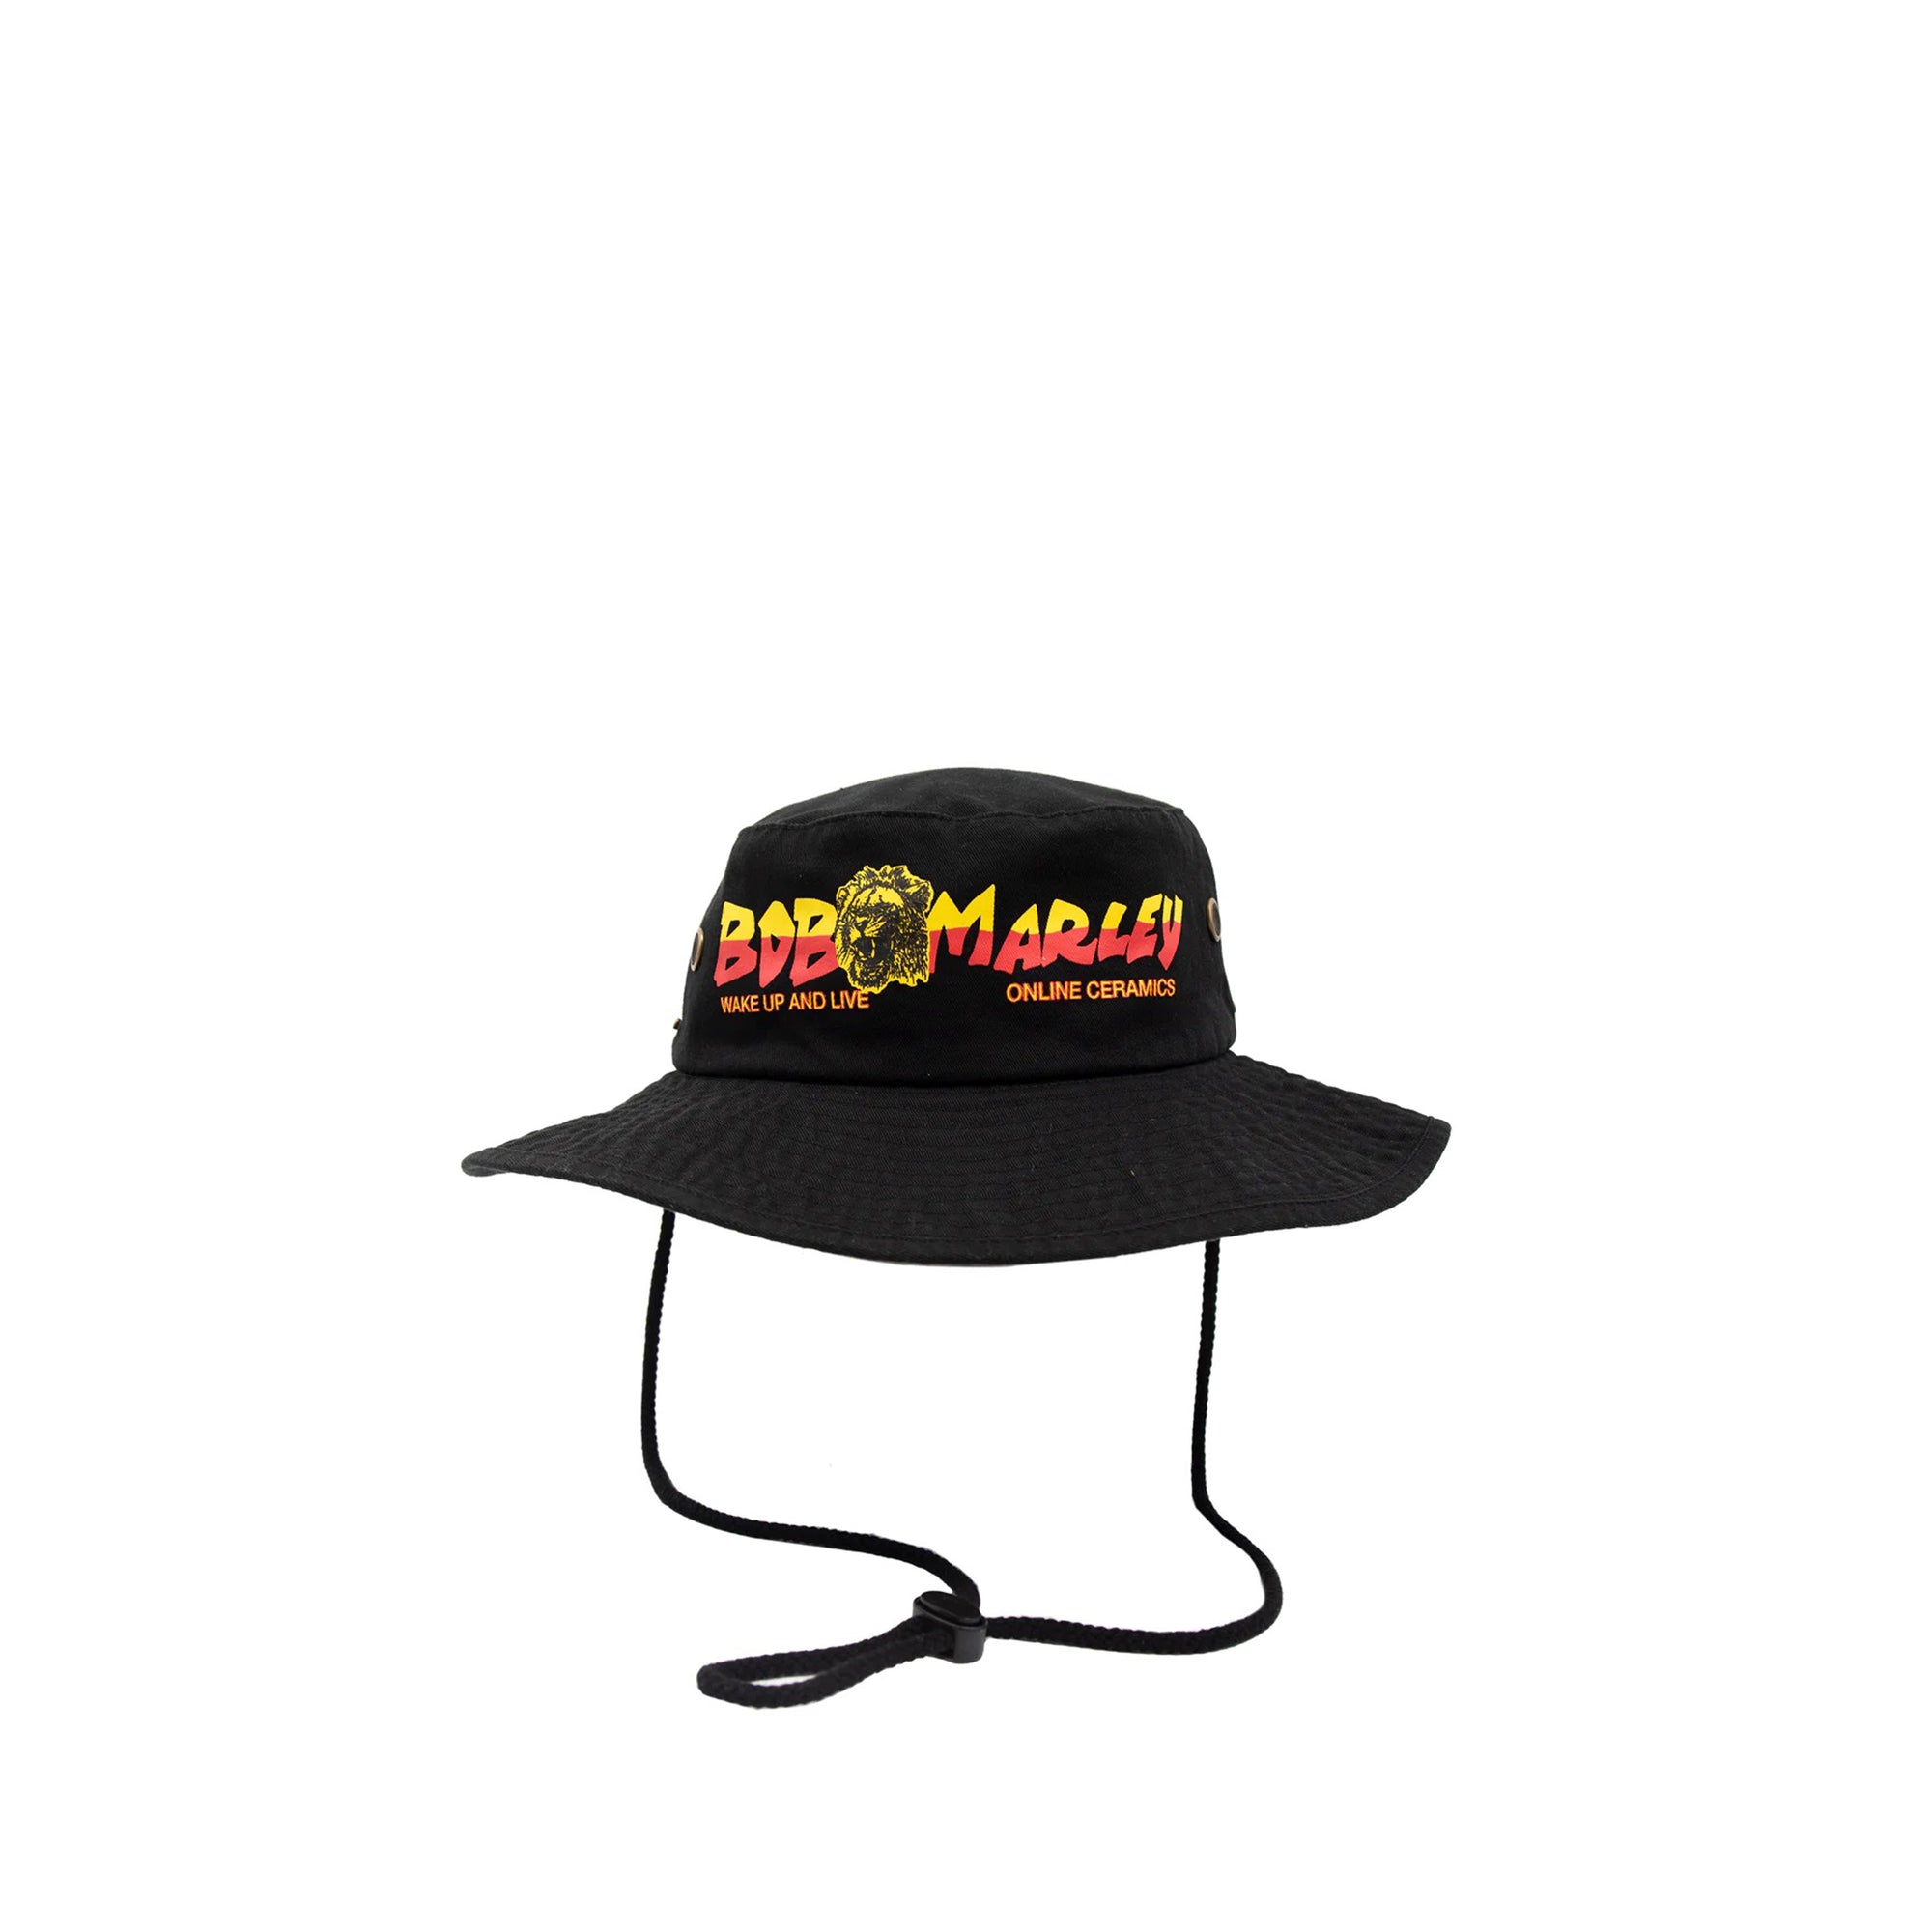 Online Ceramics - Bob Marley Hiking Hat - (Black) view 1